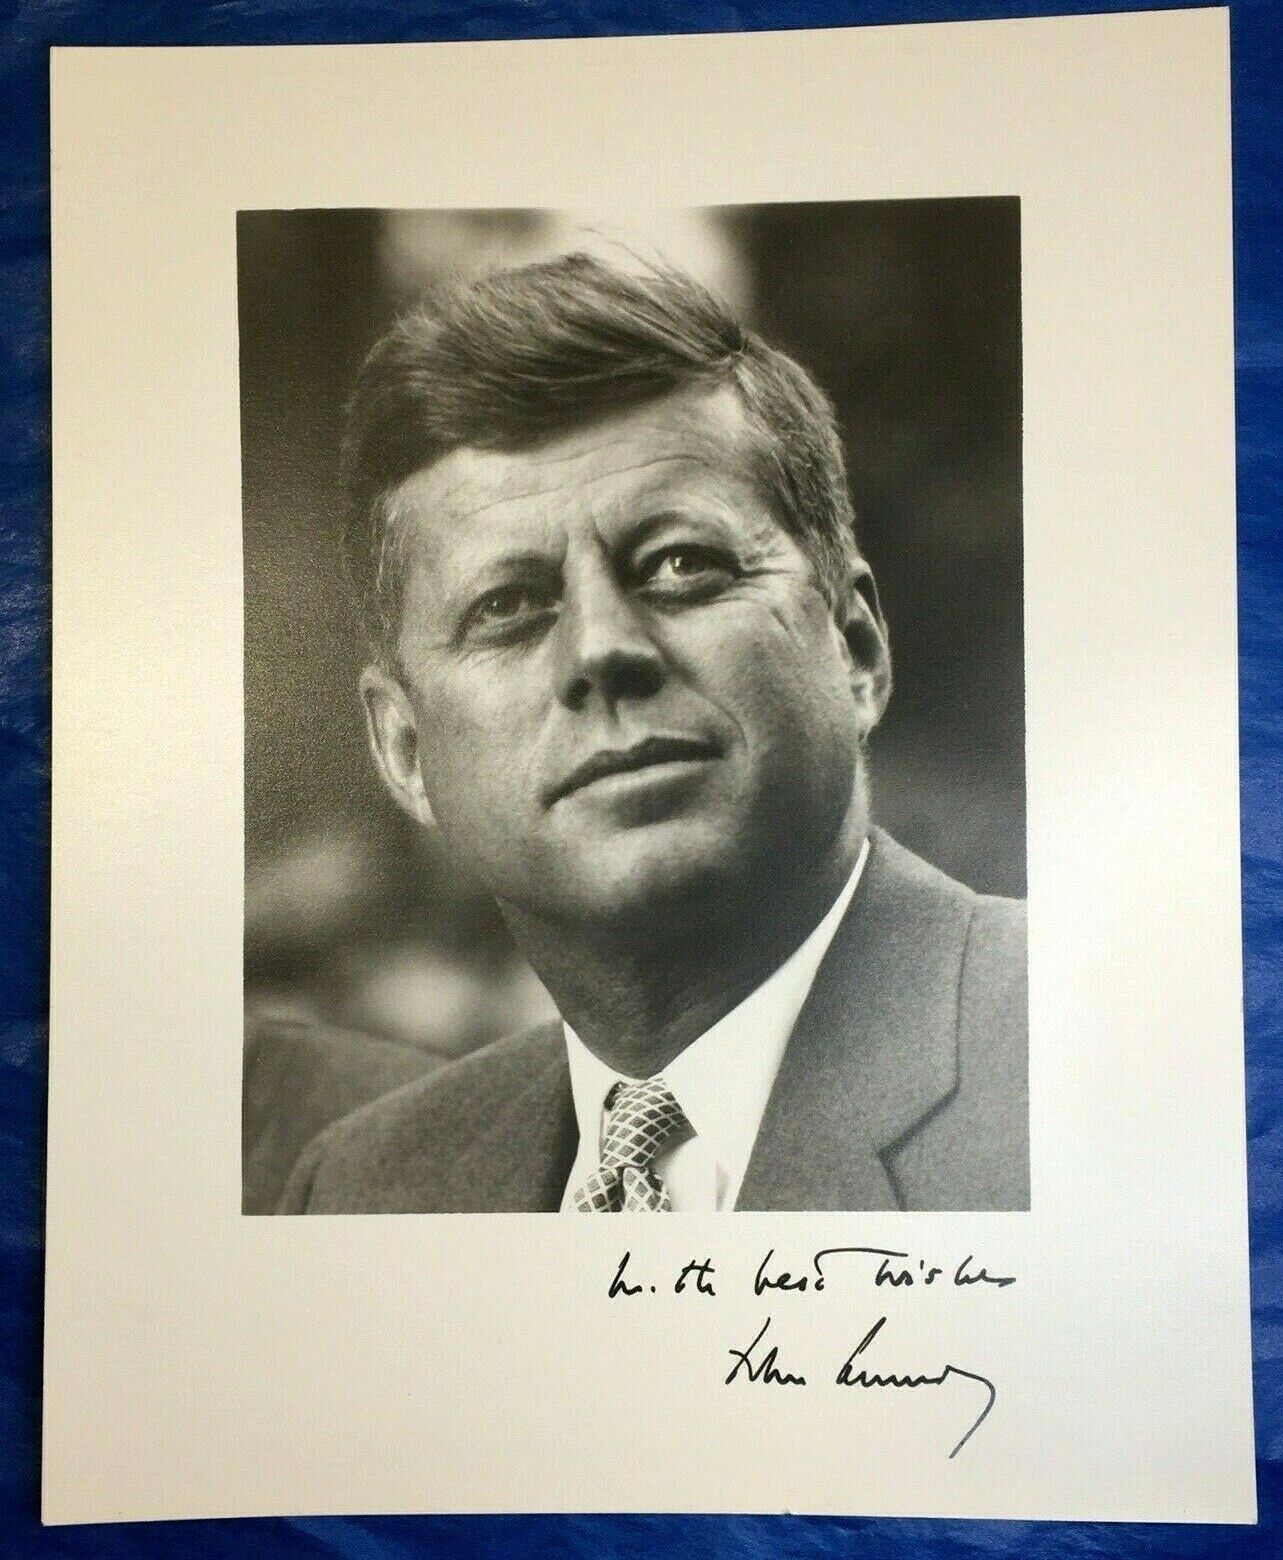 John F Kennedy Photo 8x10 Card Stock Facsimile Signed Best Wishes No COA